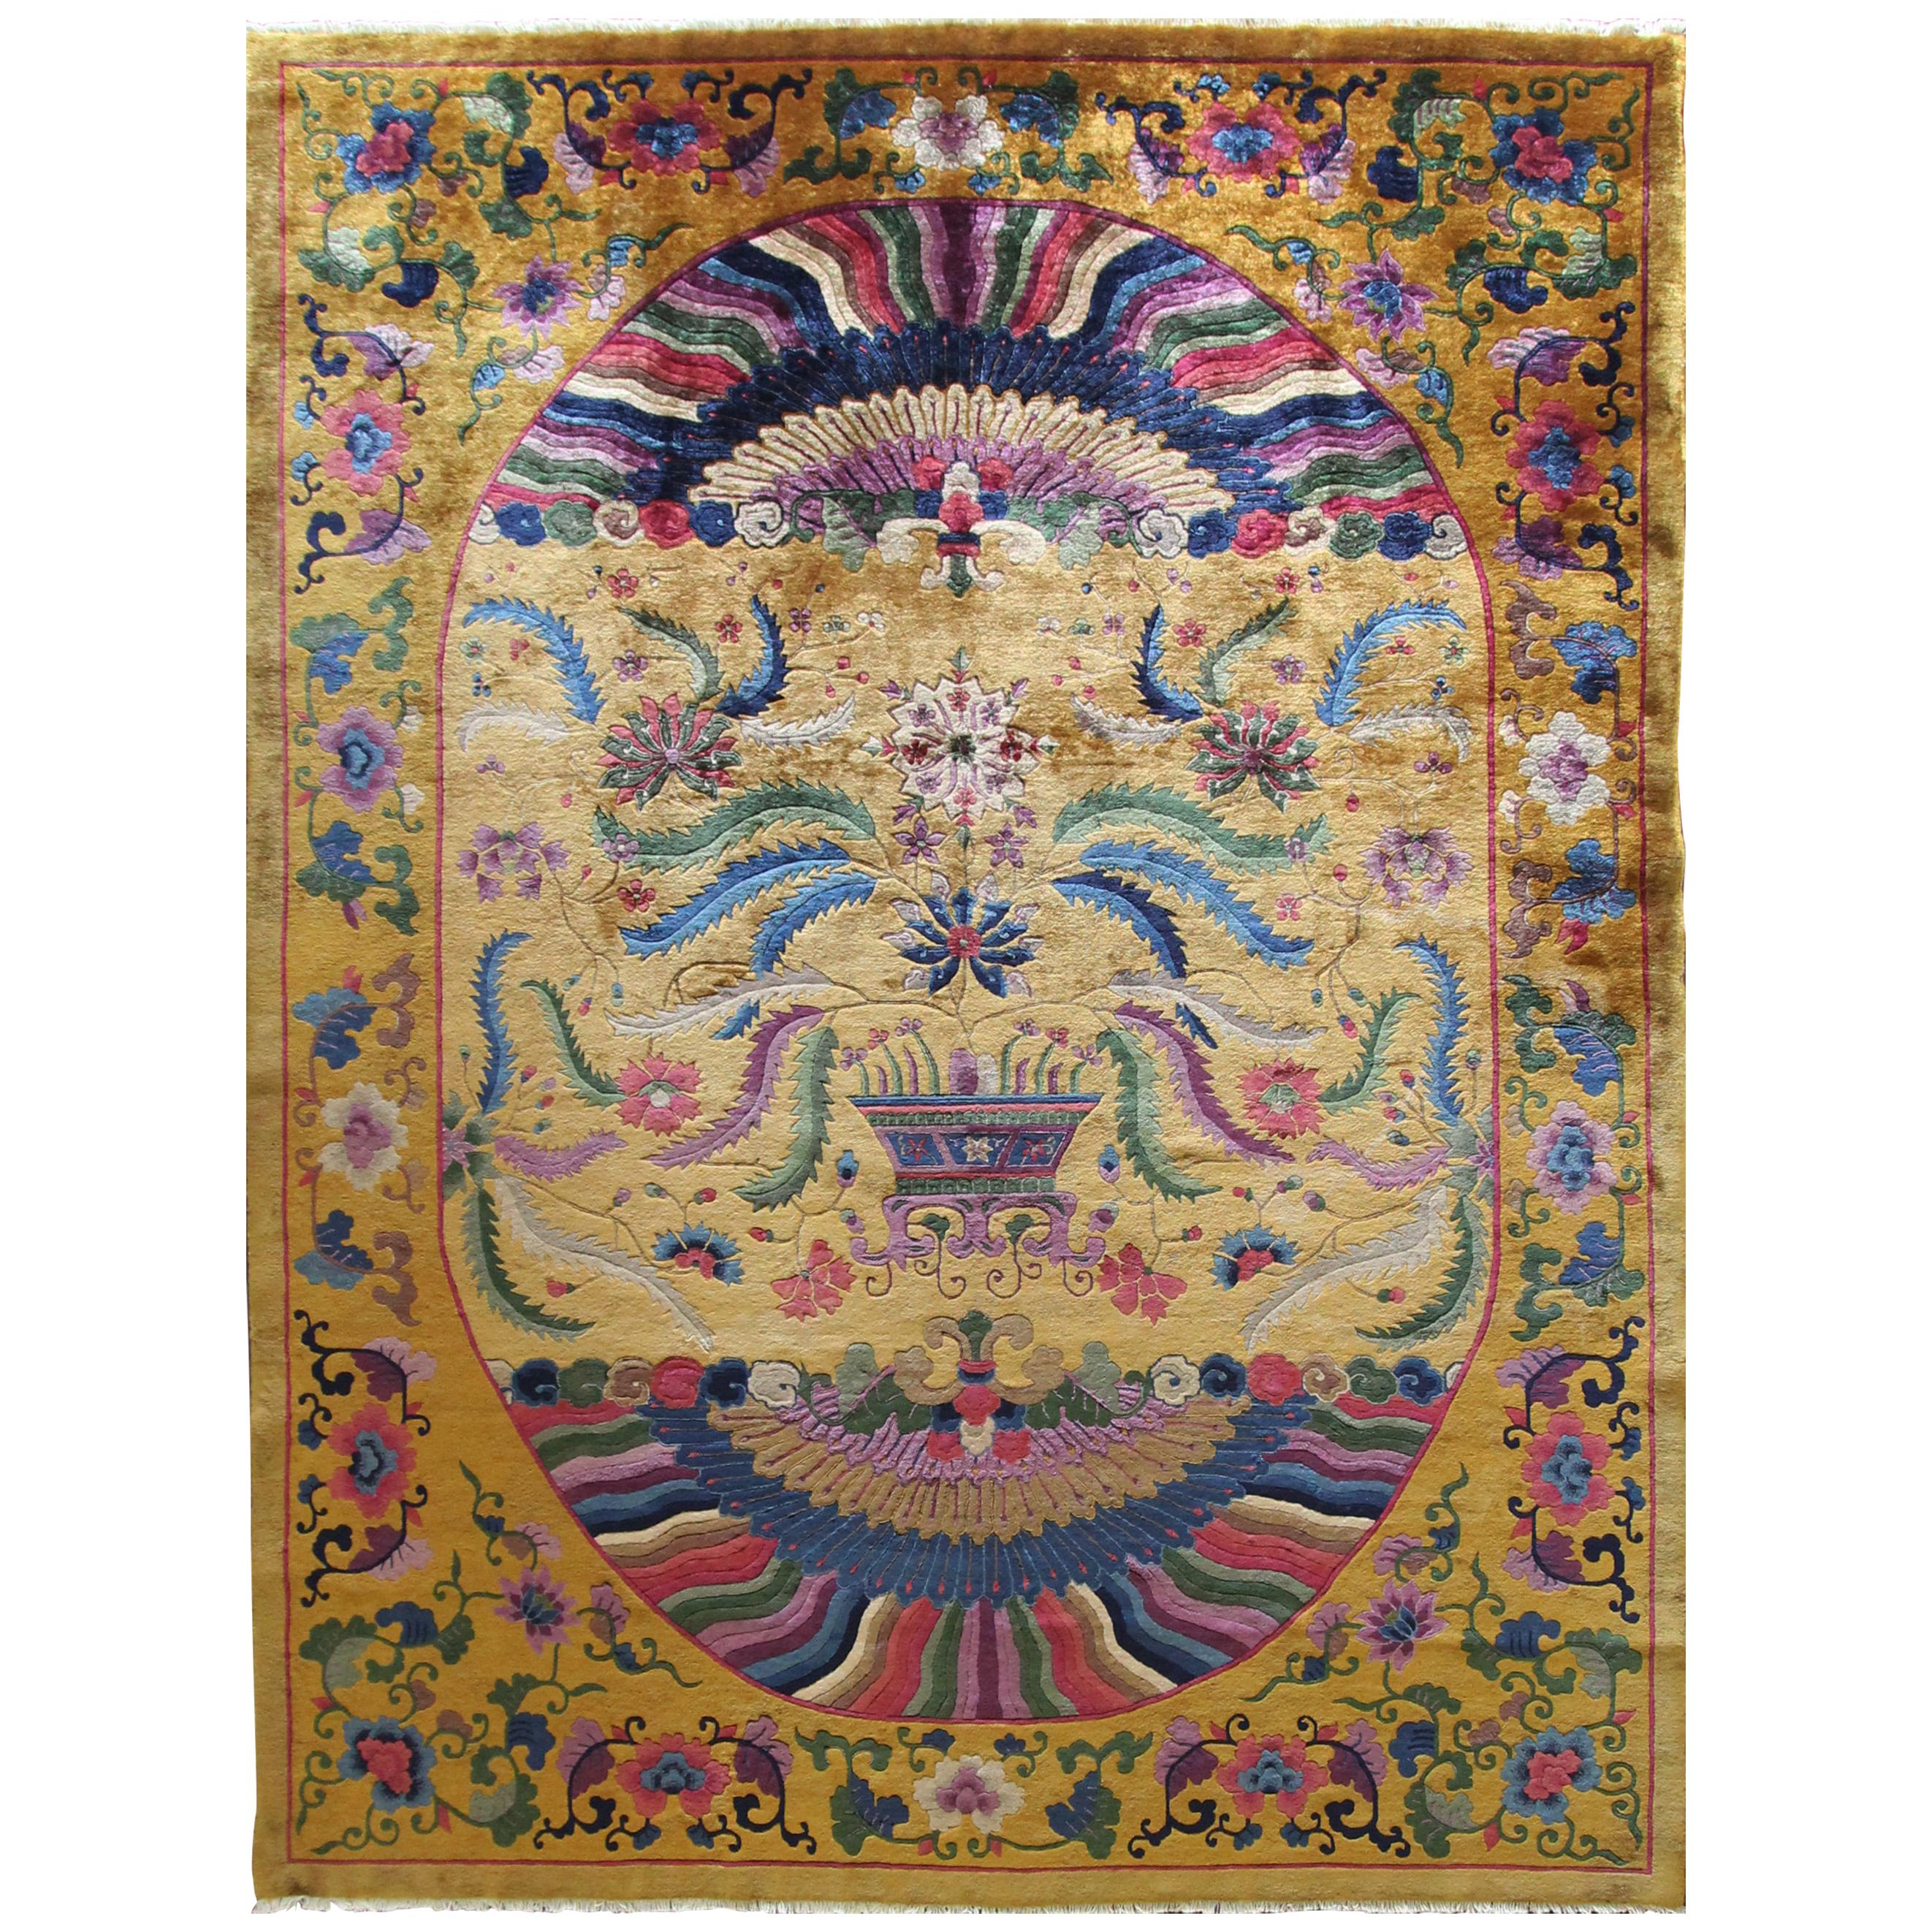 Antique Art Deco Carpet, Imperial Dynasty Rug, 8'10" x 11'7" For Sale